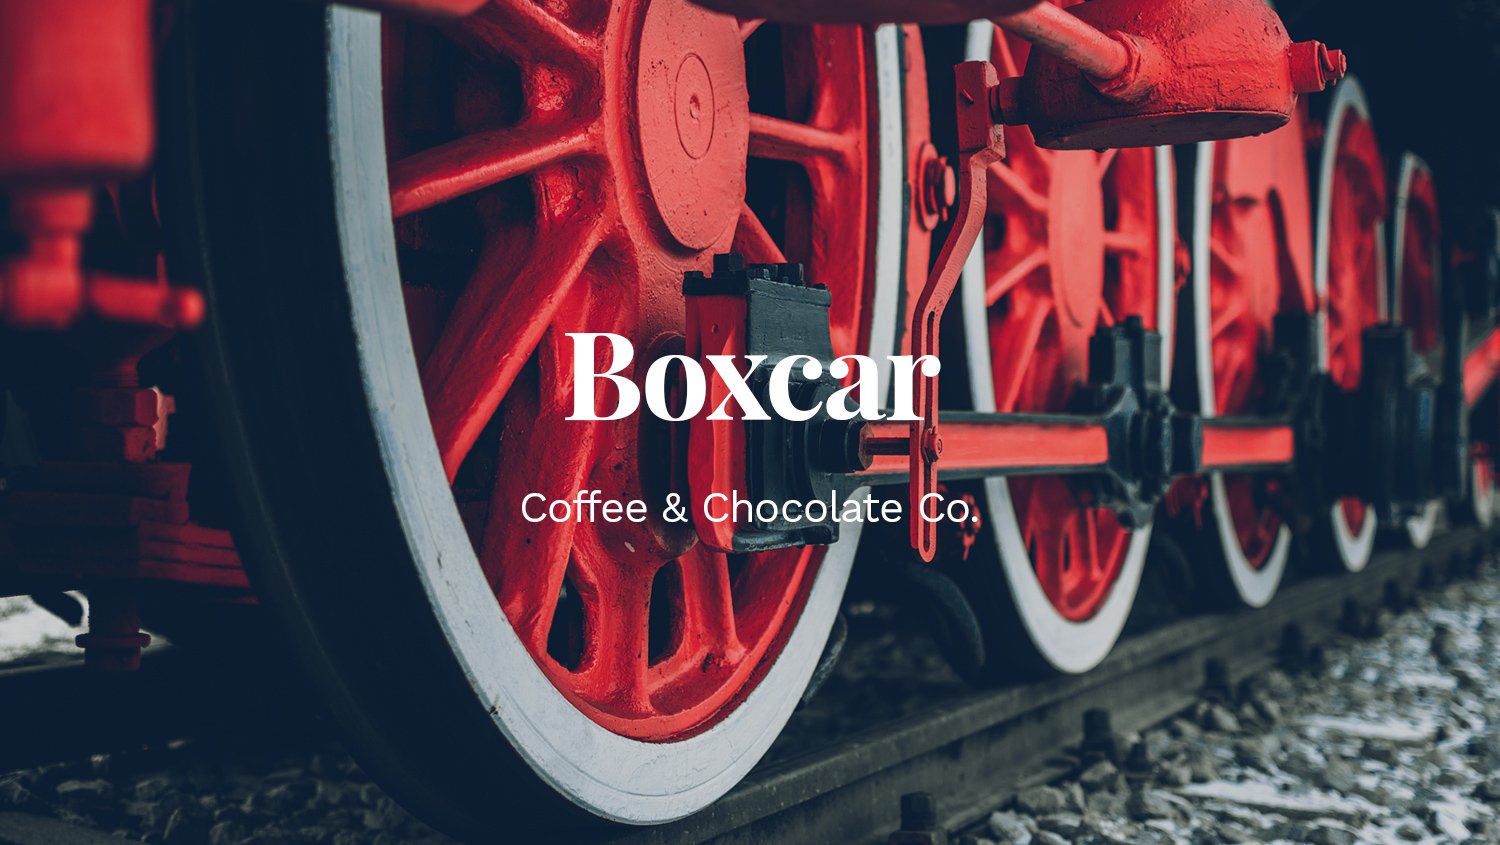 Boxcar 